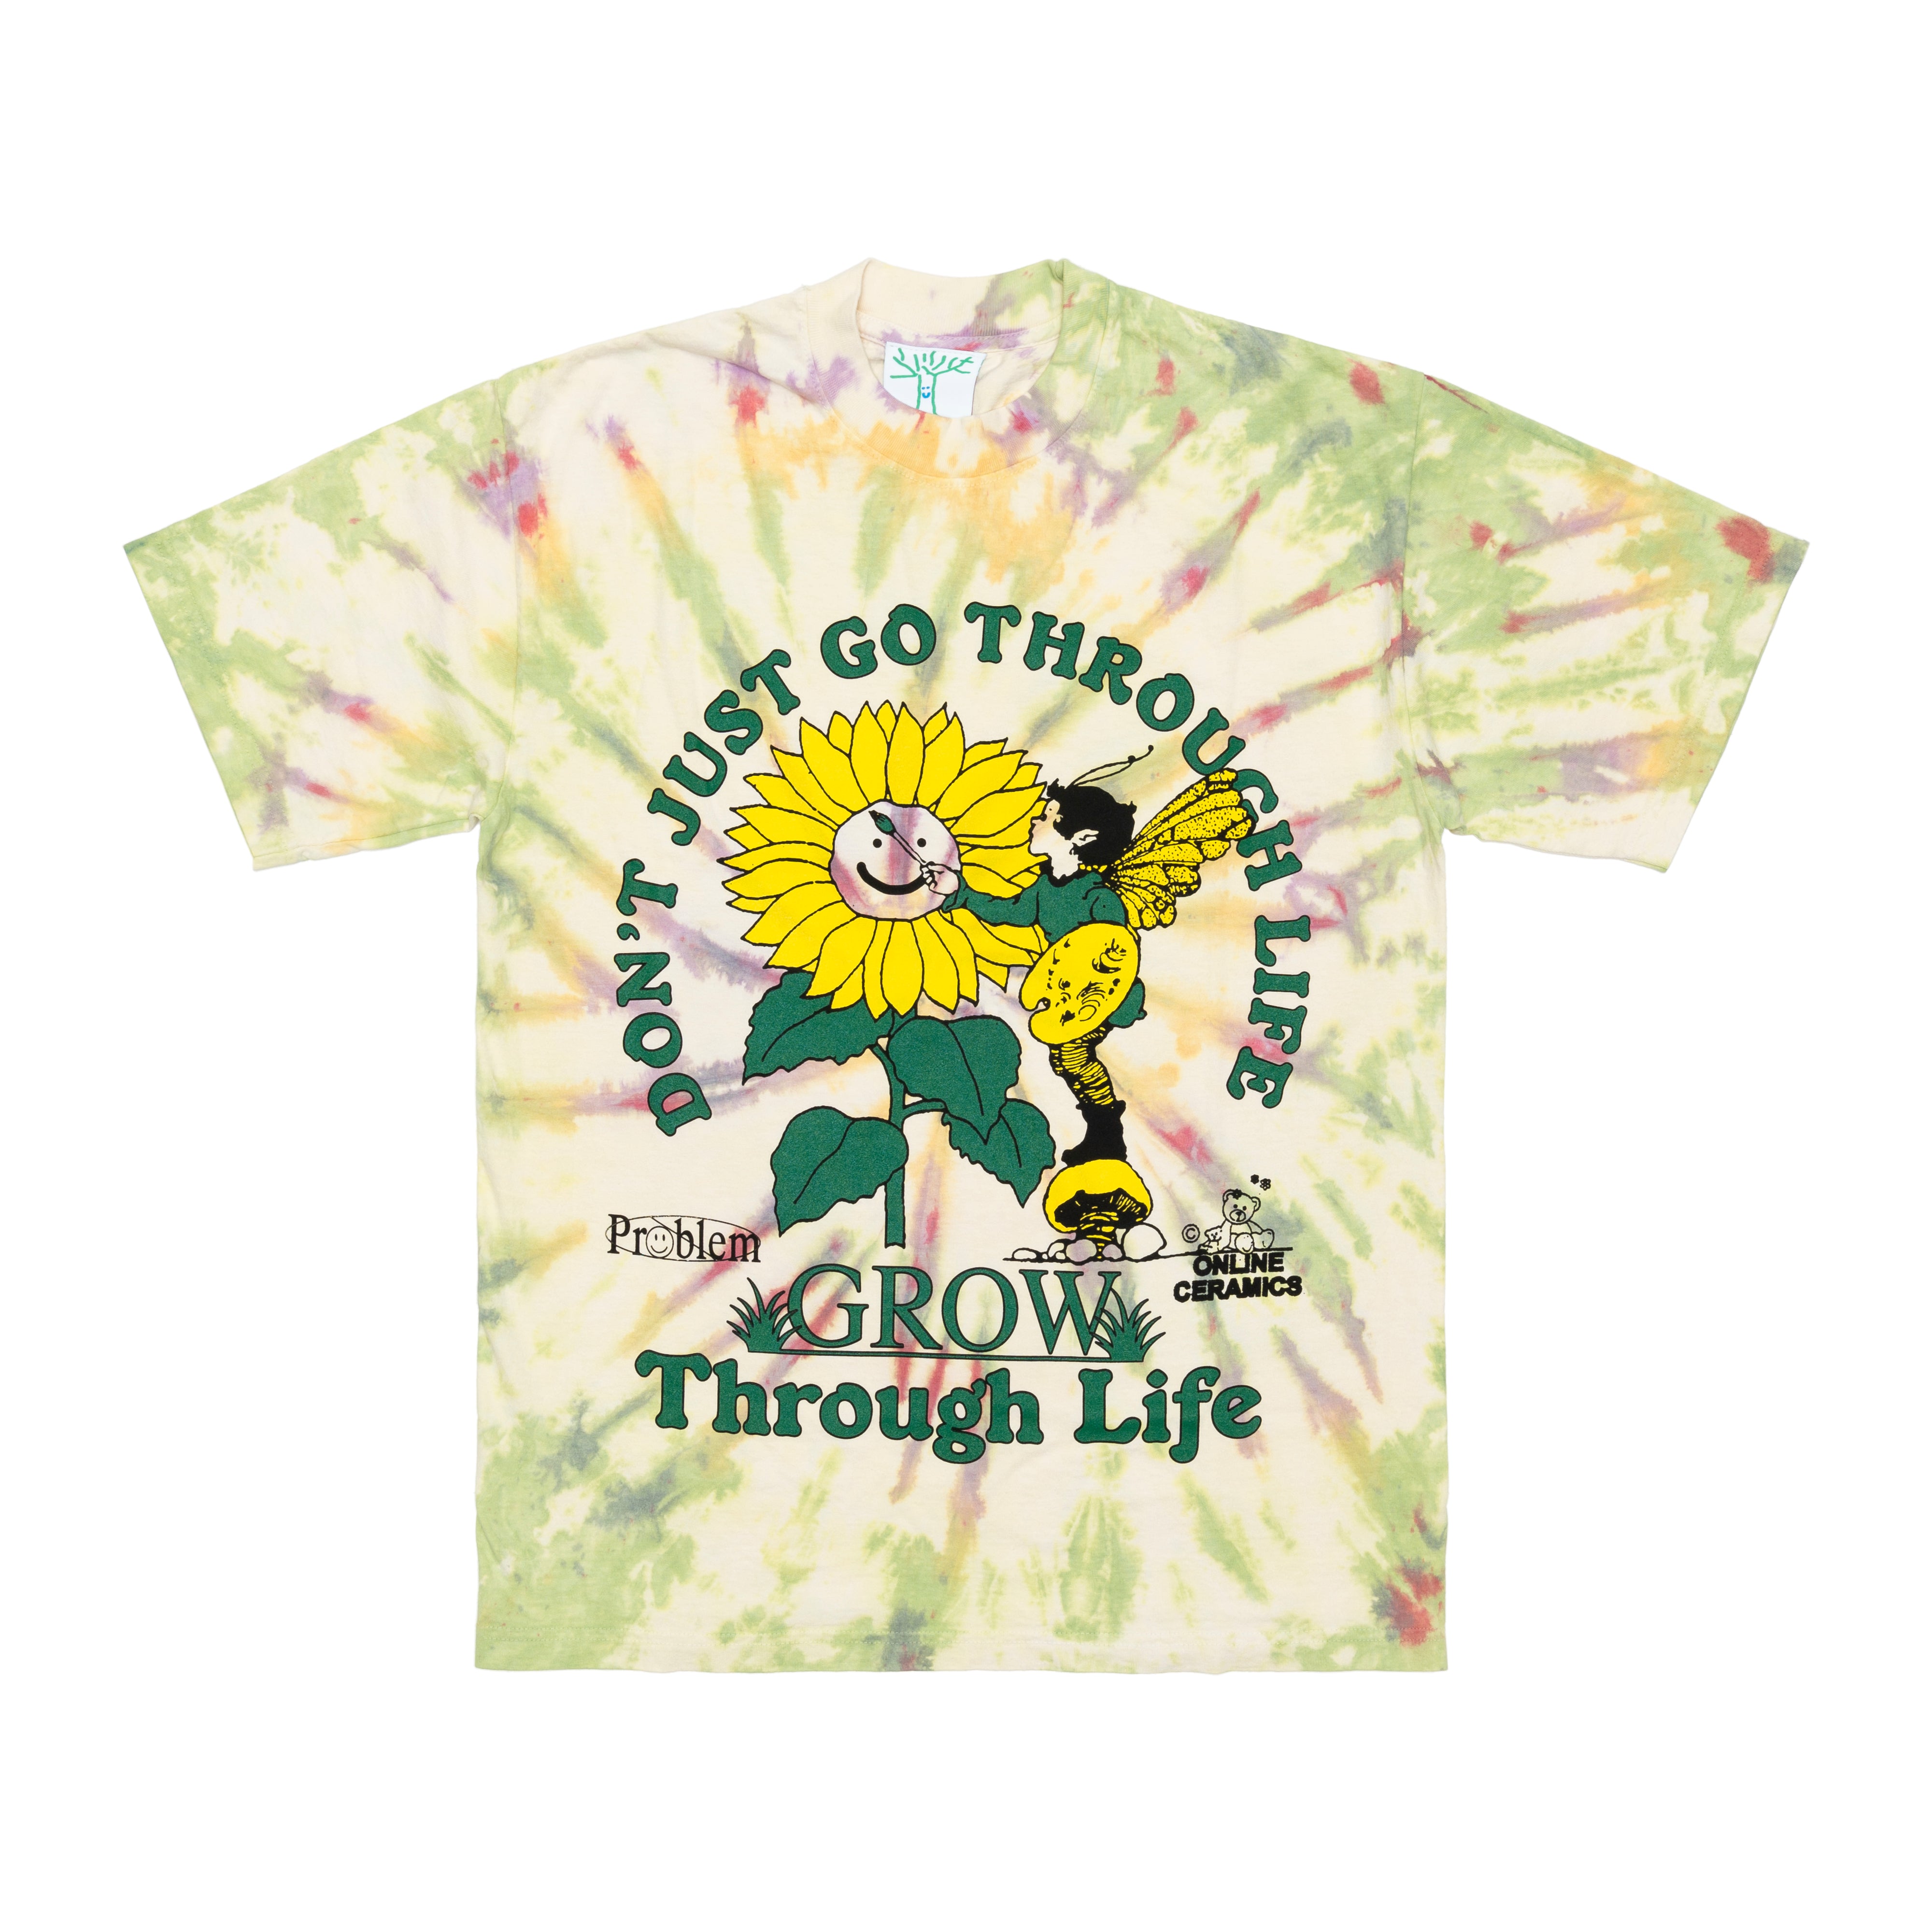 ONLINE CERAMICS - Grow Through Life - (Hand Dyed Tie-Dye